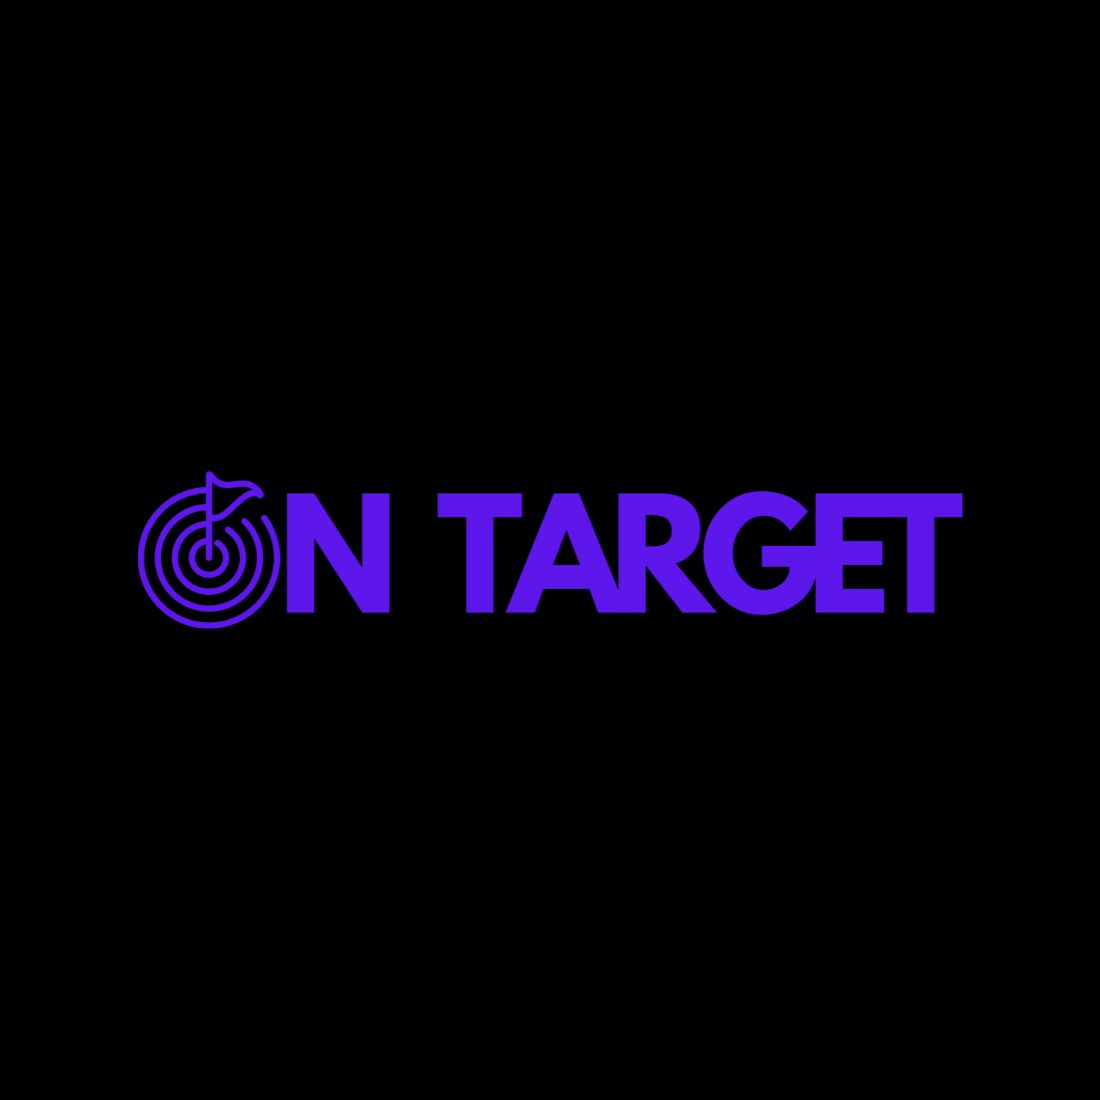 on target logo design preview image.